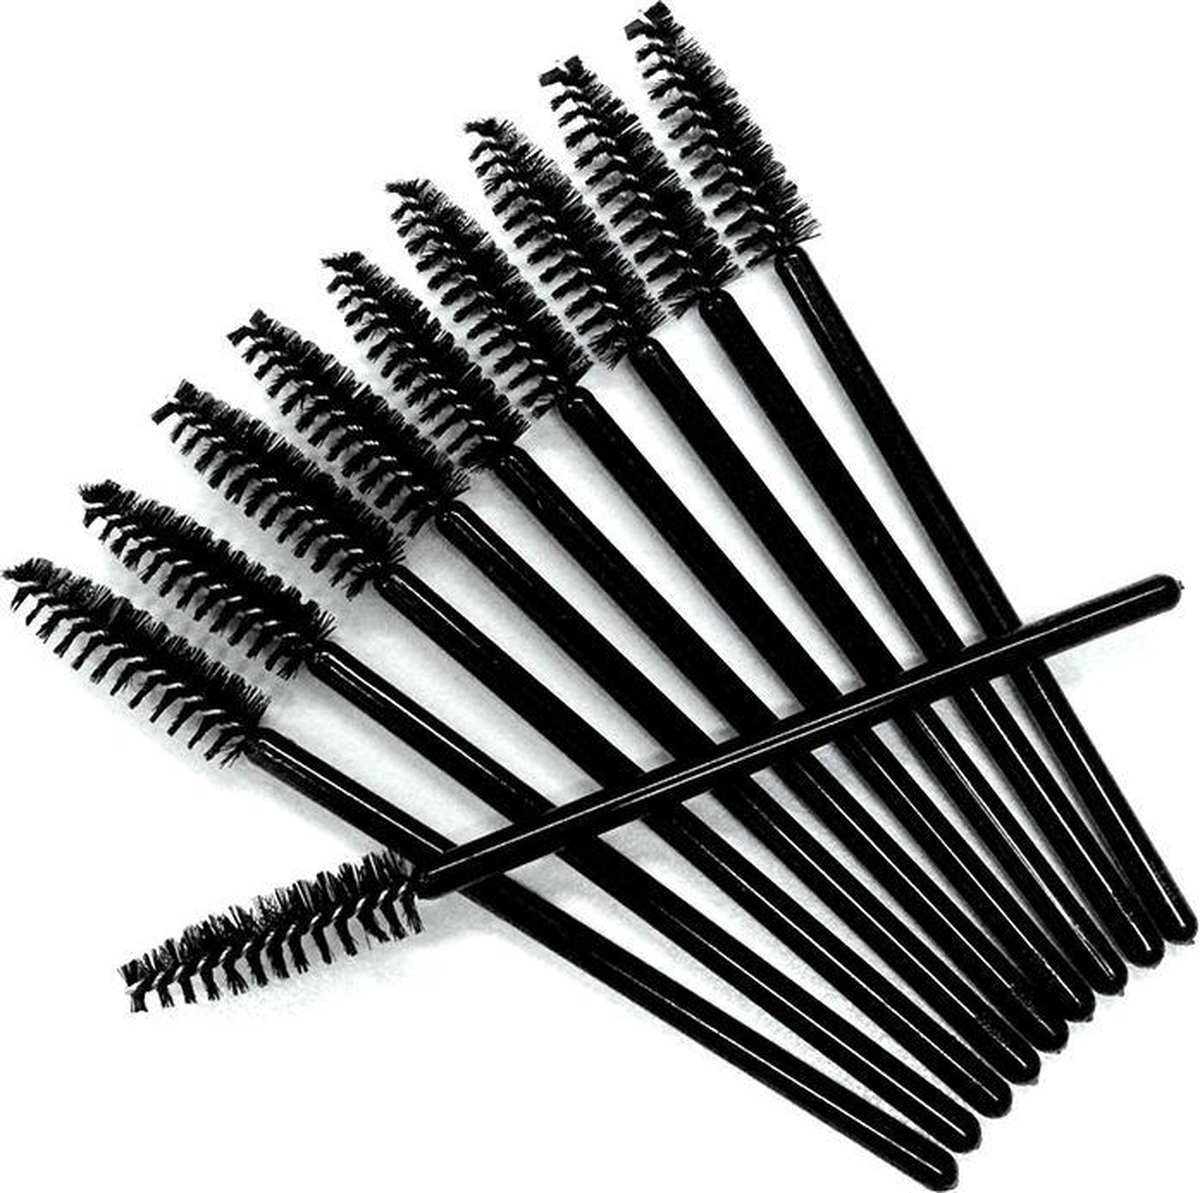 Mascara borsteltjes wegwerp disposable brush wimpers eyelashes eyelash extension zwart 50 stuks